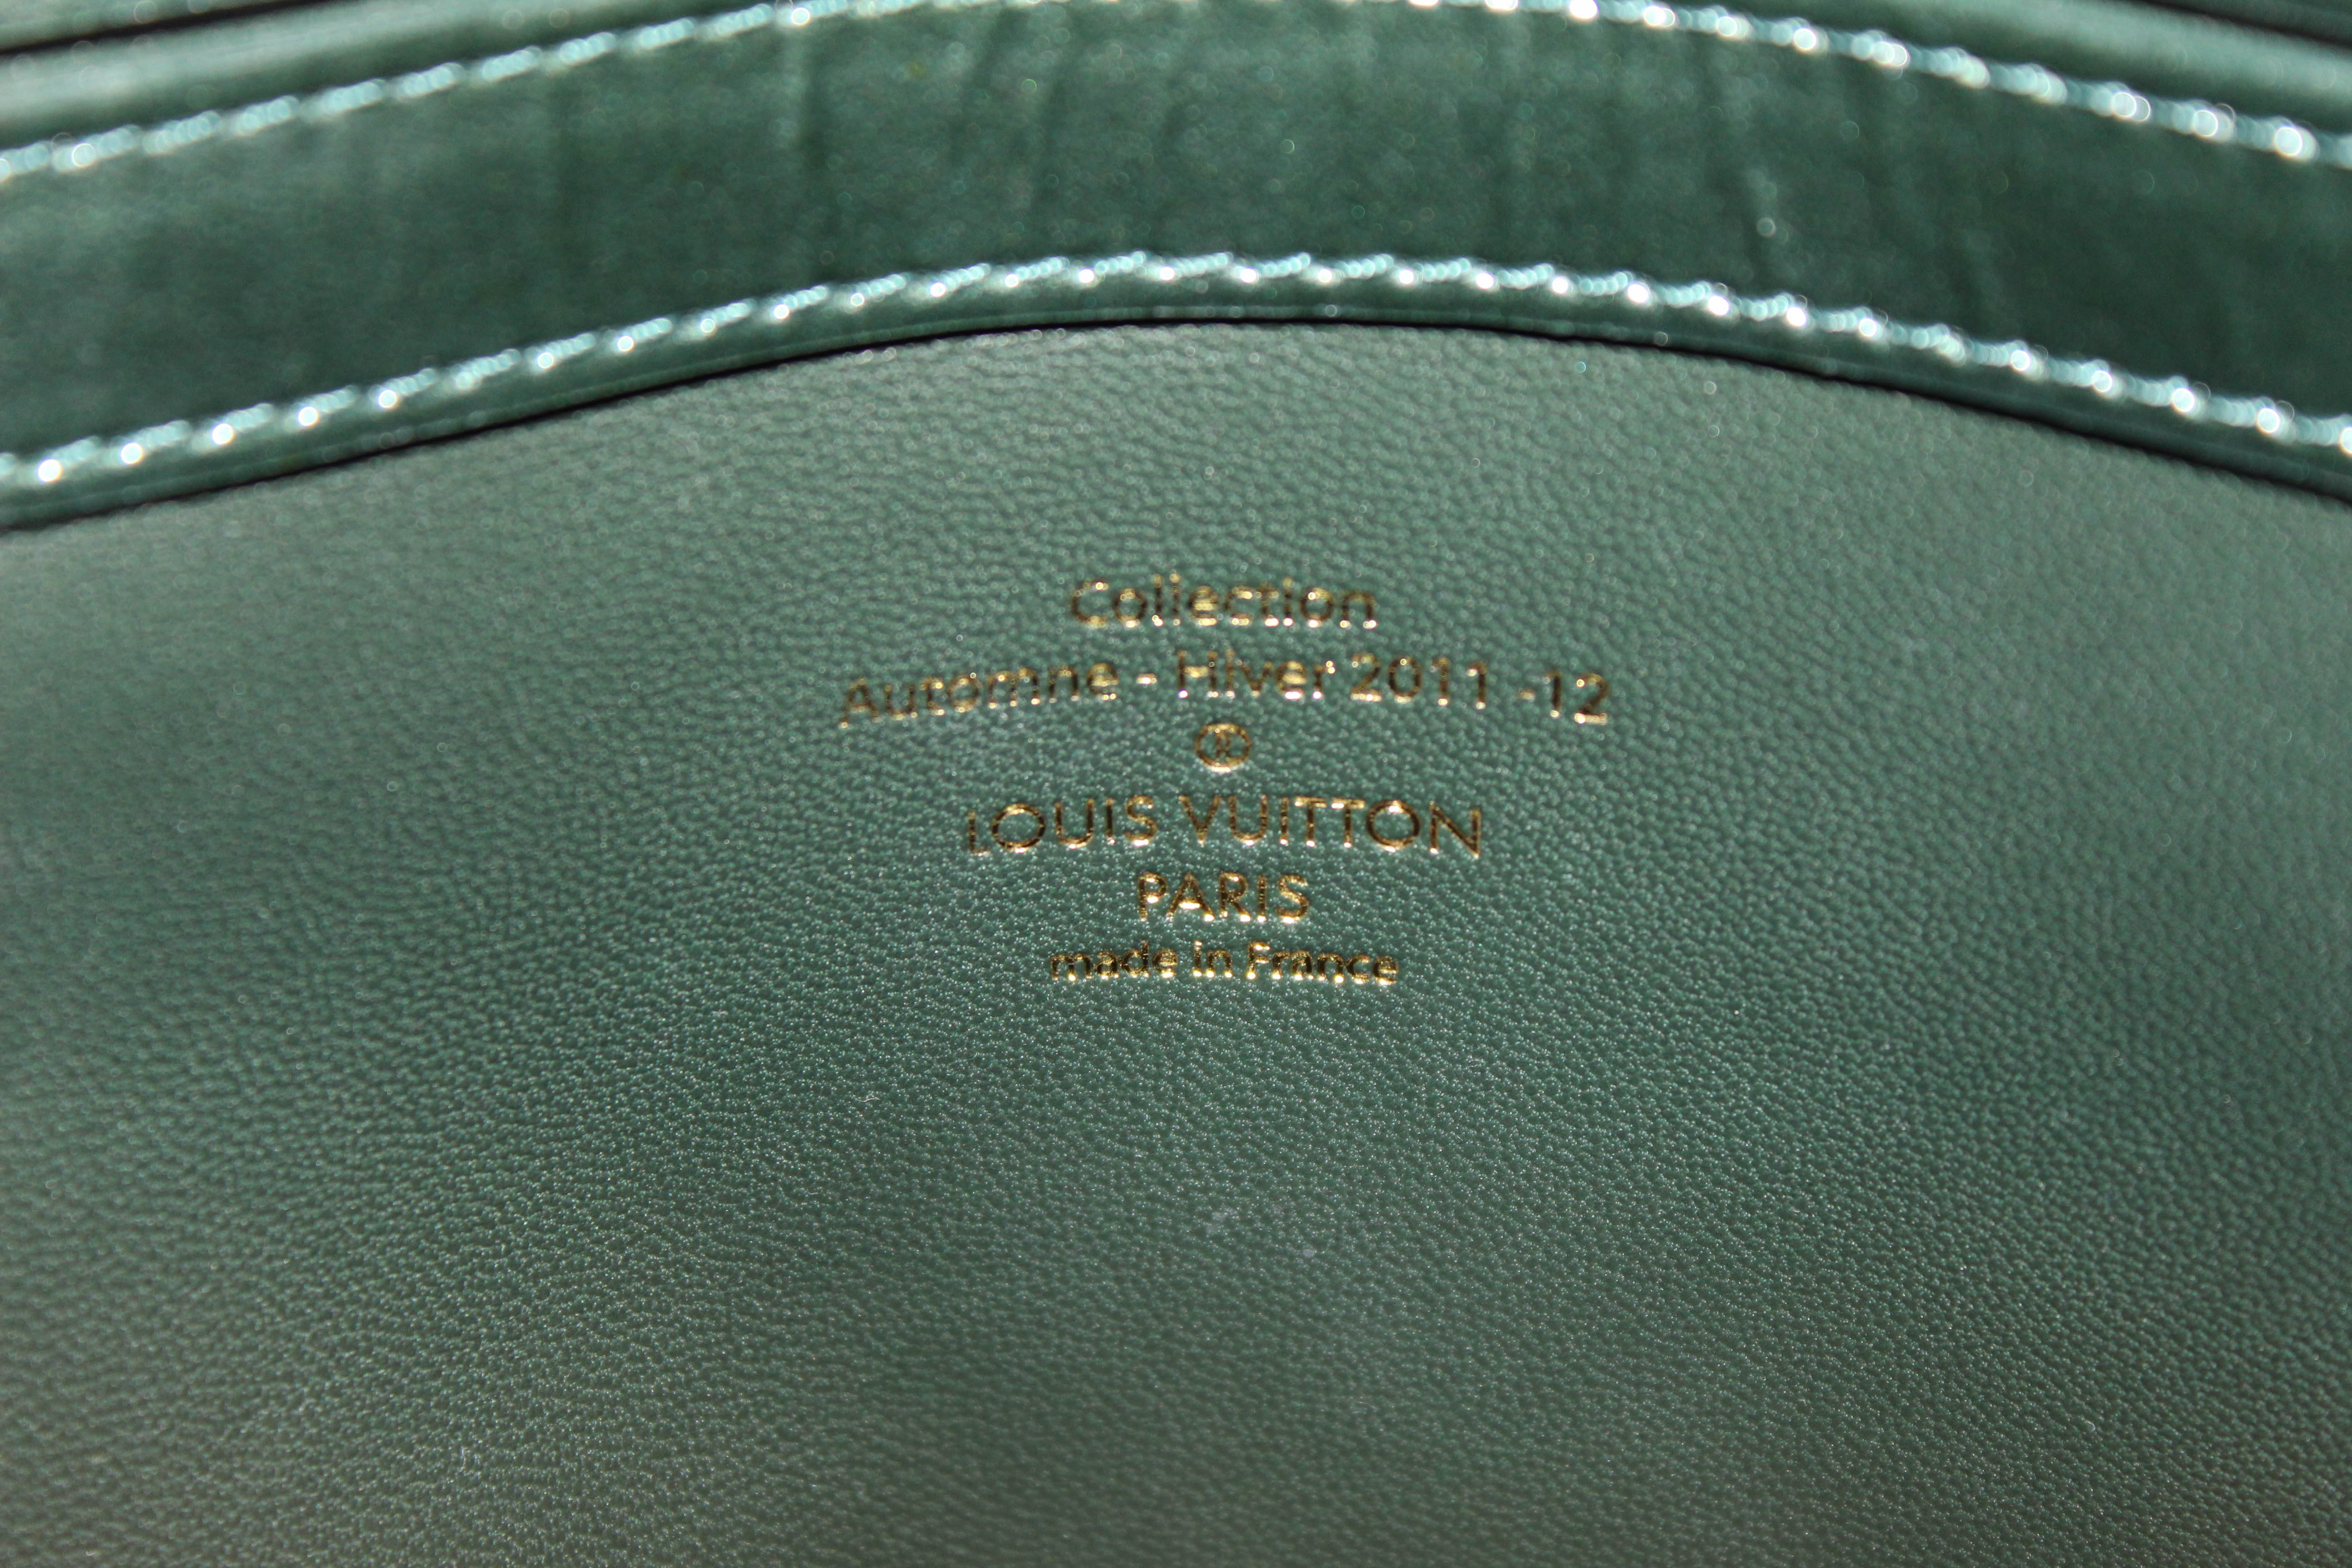 Authentic Louis Vuitton Green Monogram Limited Edition Green Monogram Fascination Lockit Handbag